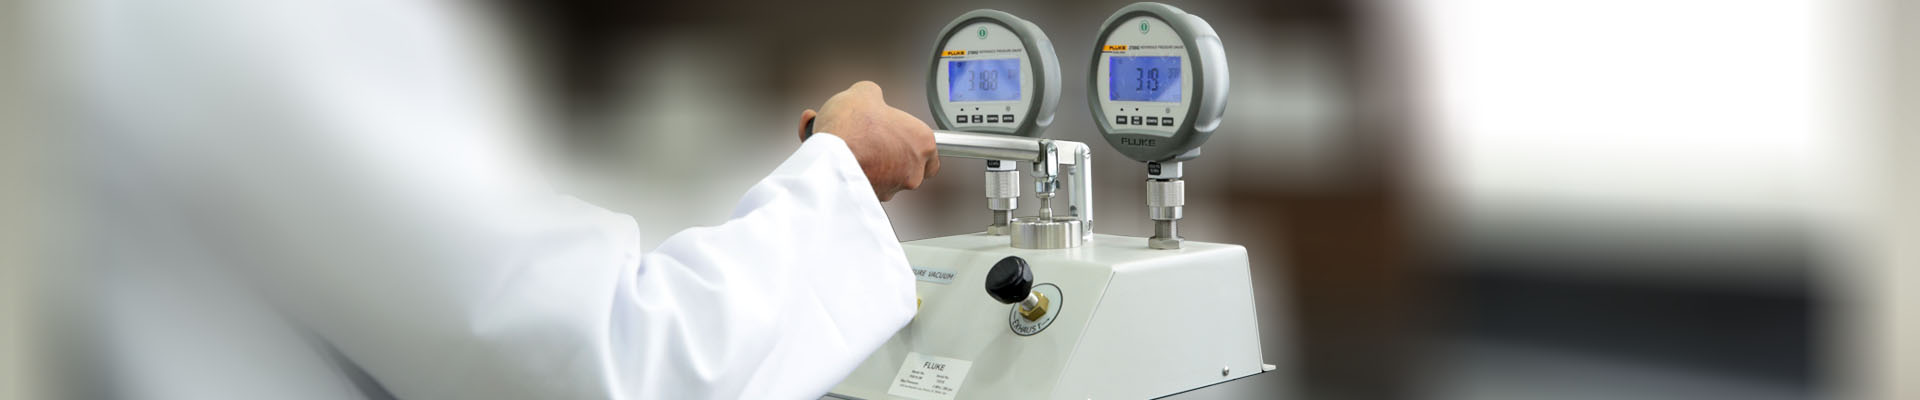 instrument calibration equipment